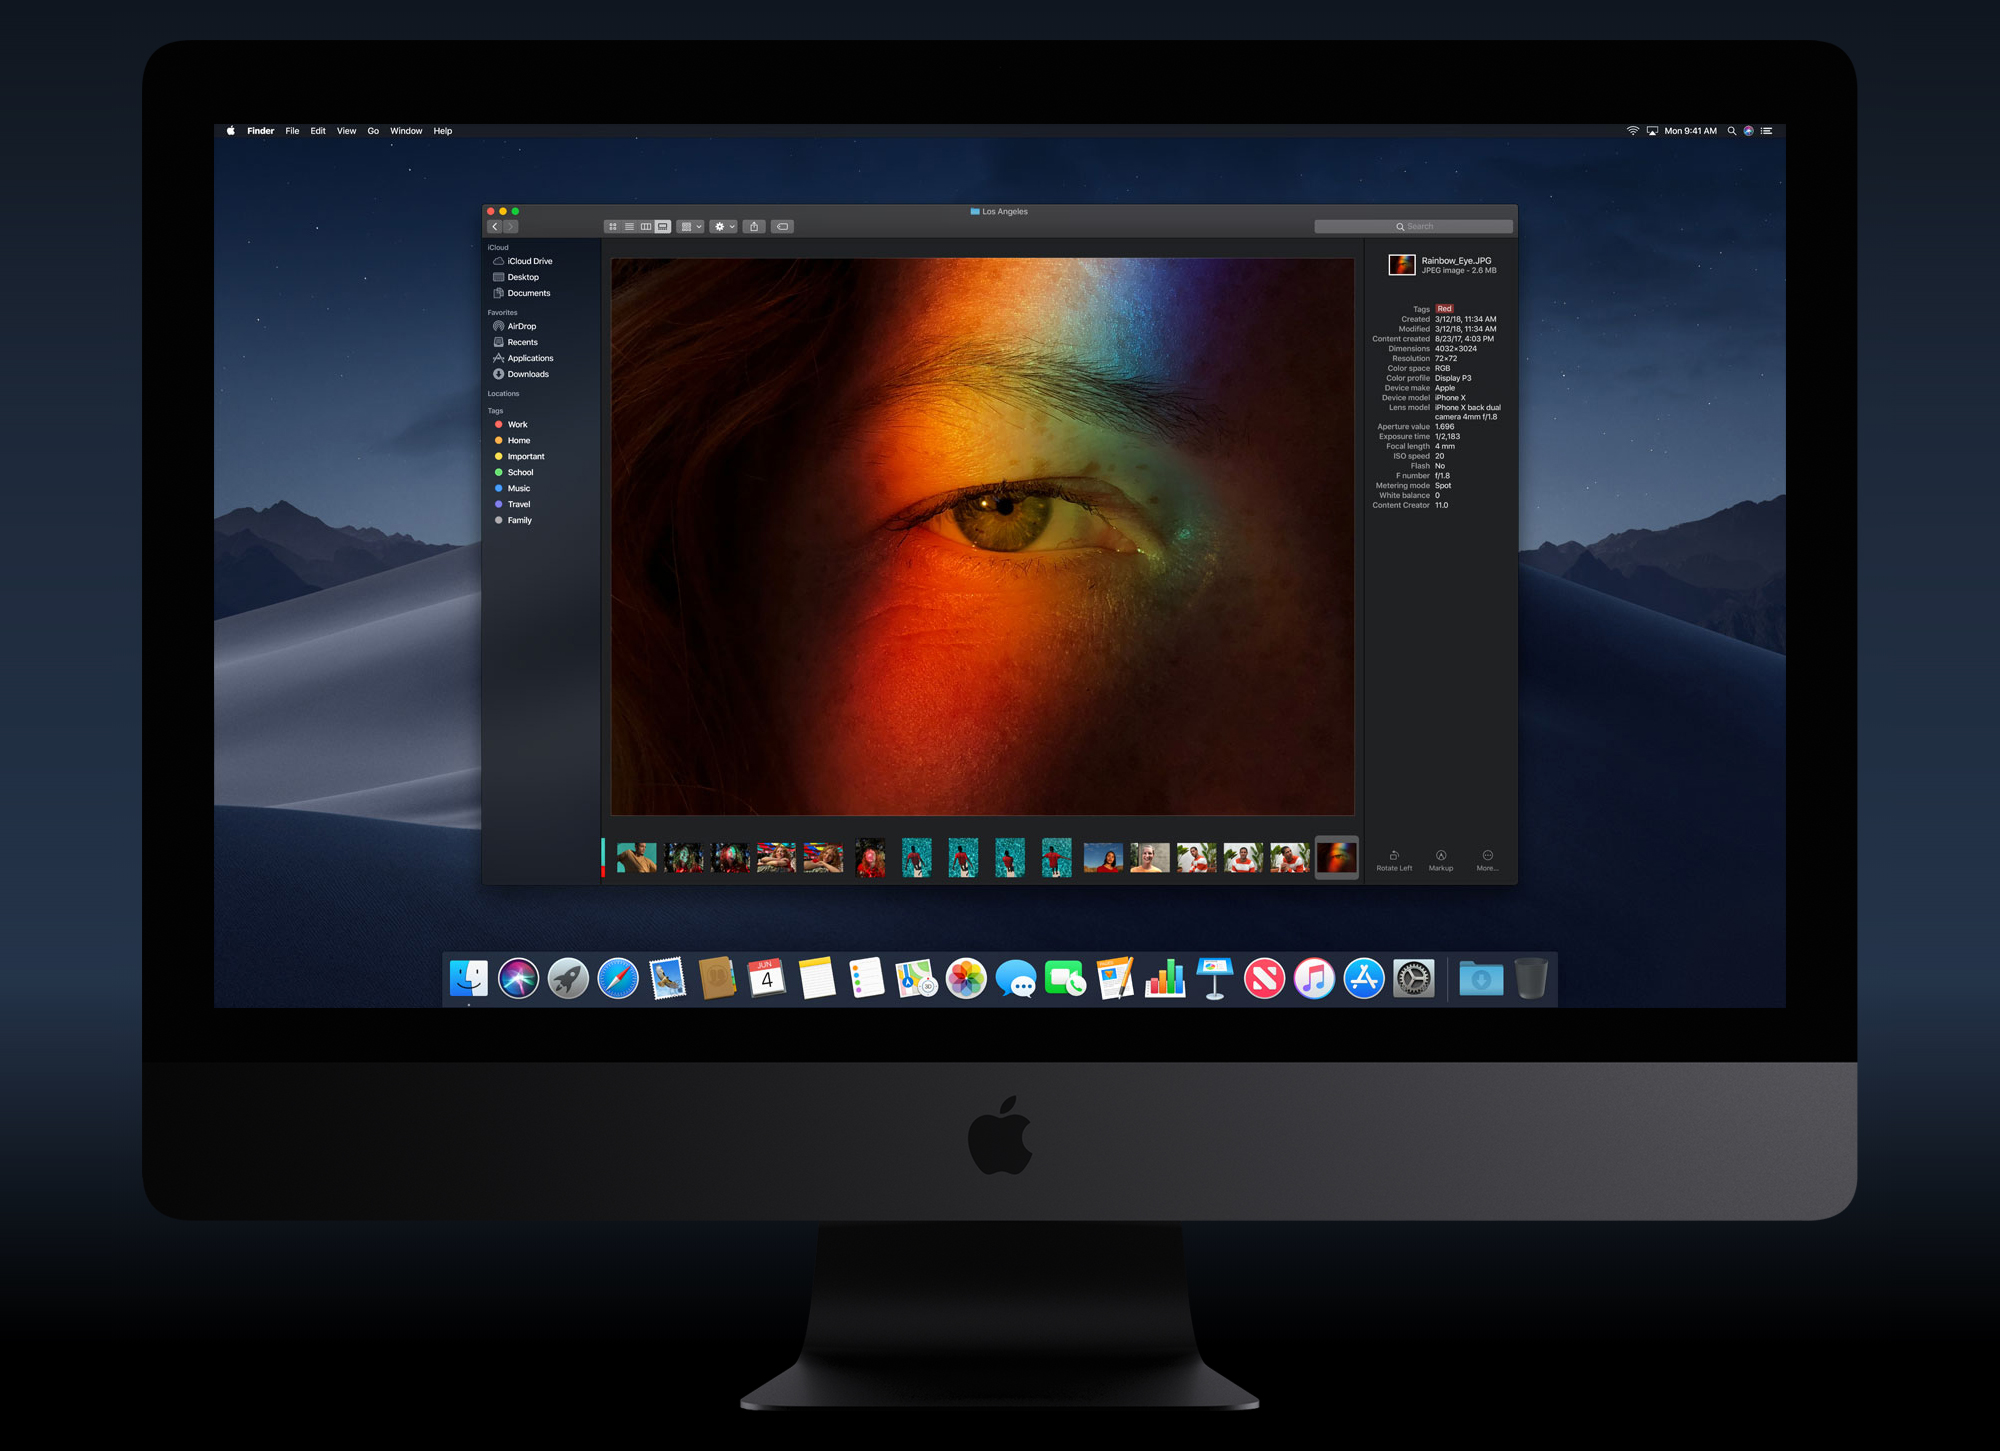 iMac with macOS Mojave